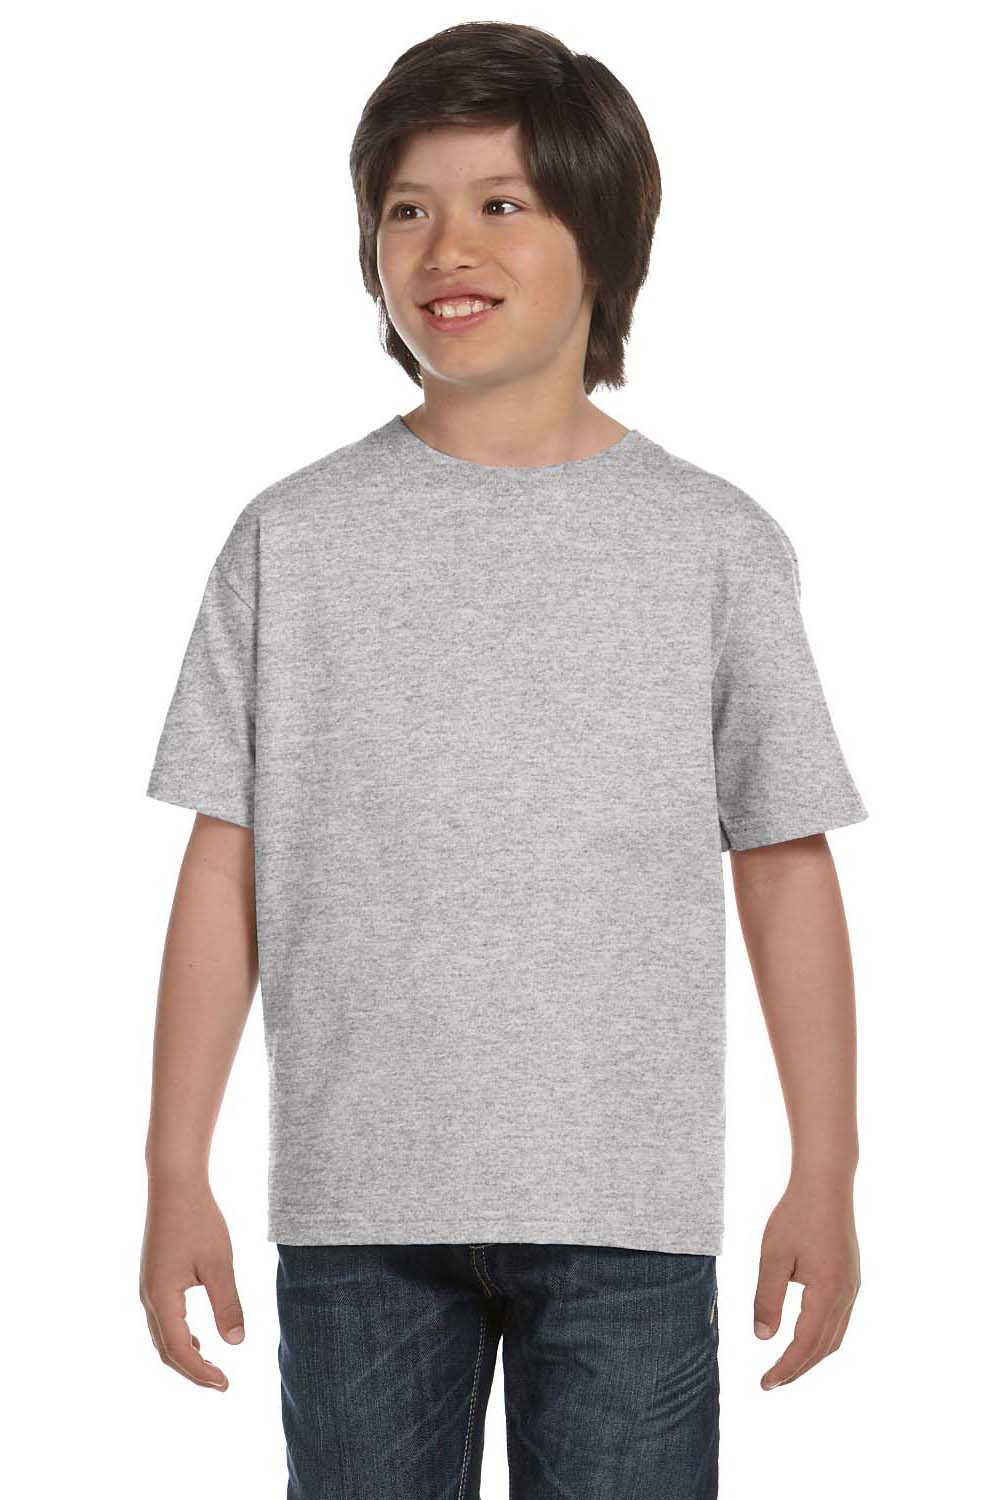 Hanes 5380 Youth Beefy-T Short Sleeve Crewneck T-Shirt Light Steel Grey Front